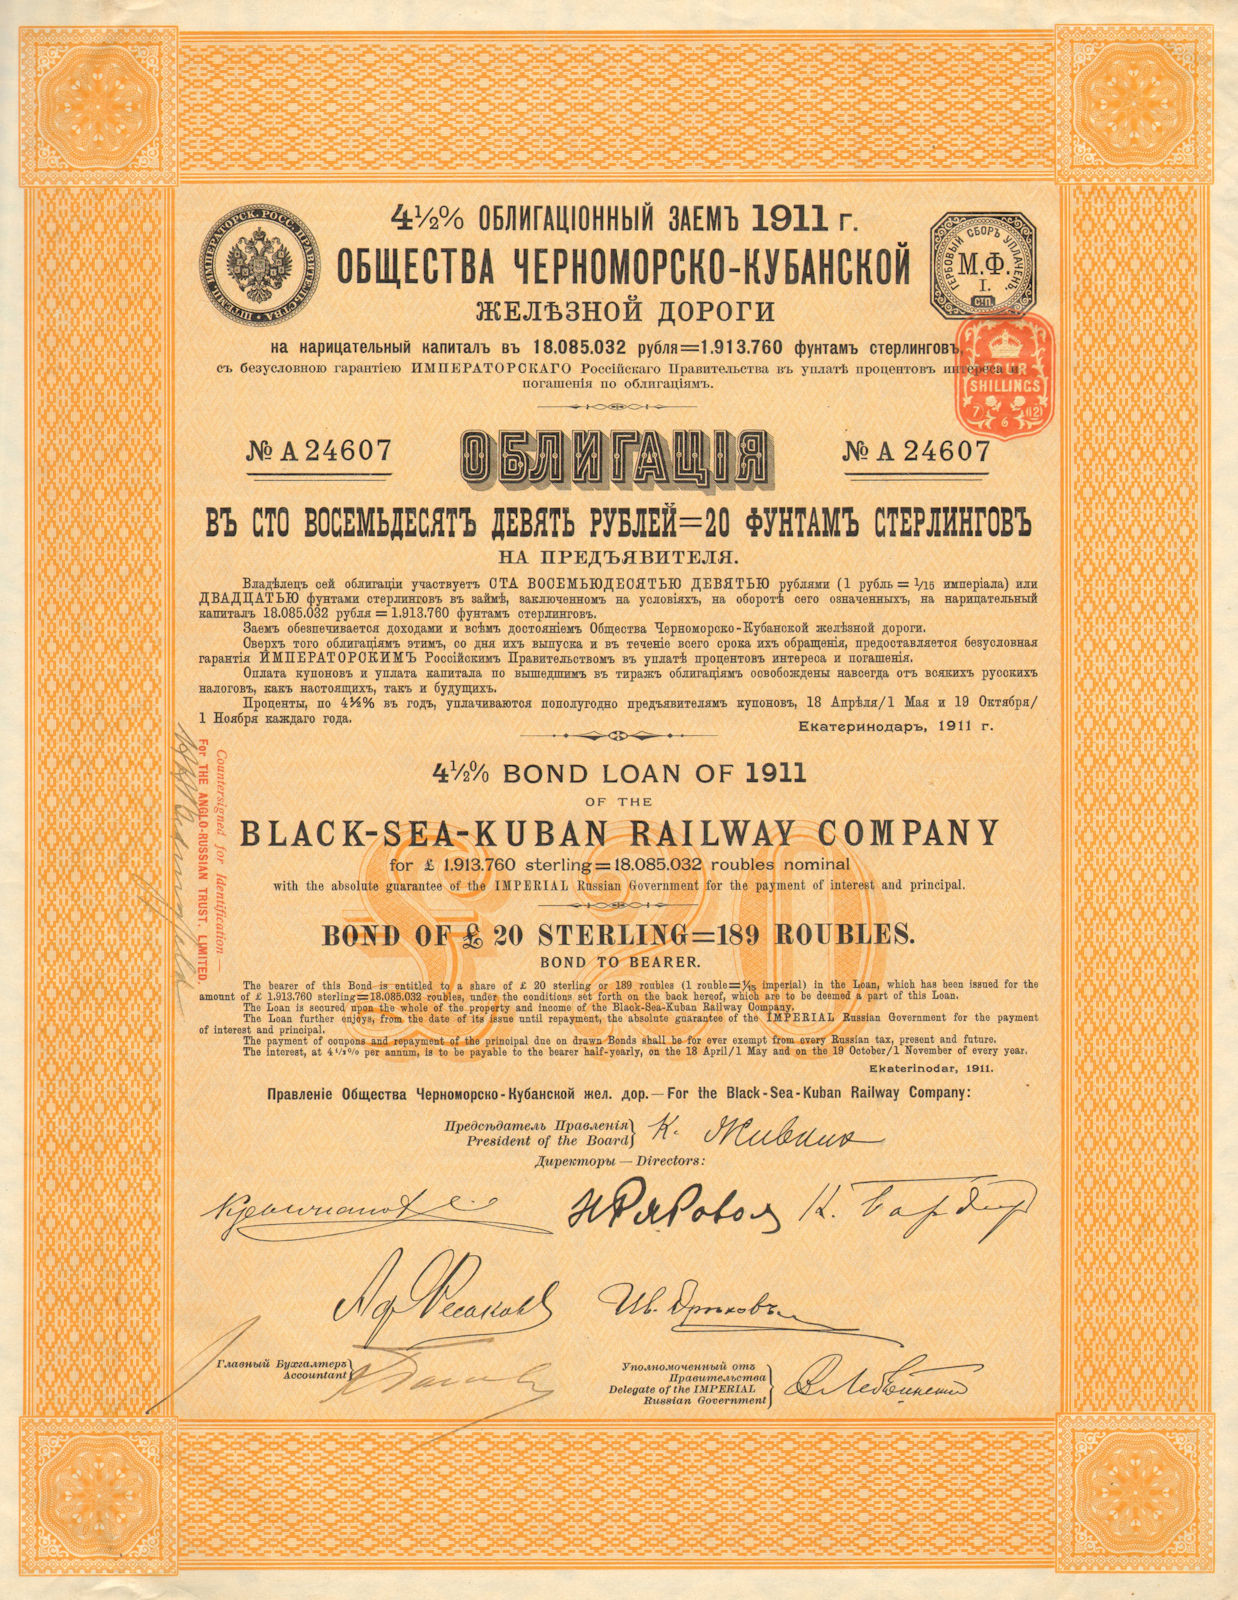 Associate Product BLACK SEA- KUBAN RAILWAY COMPANY bond certificate 4.5% 189 Roubles. £20 1911